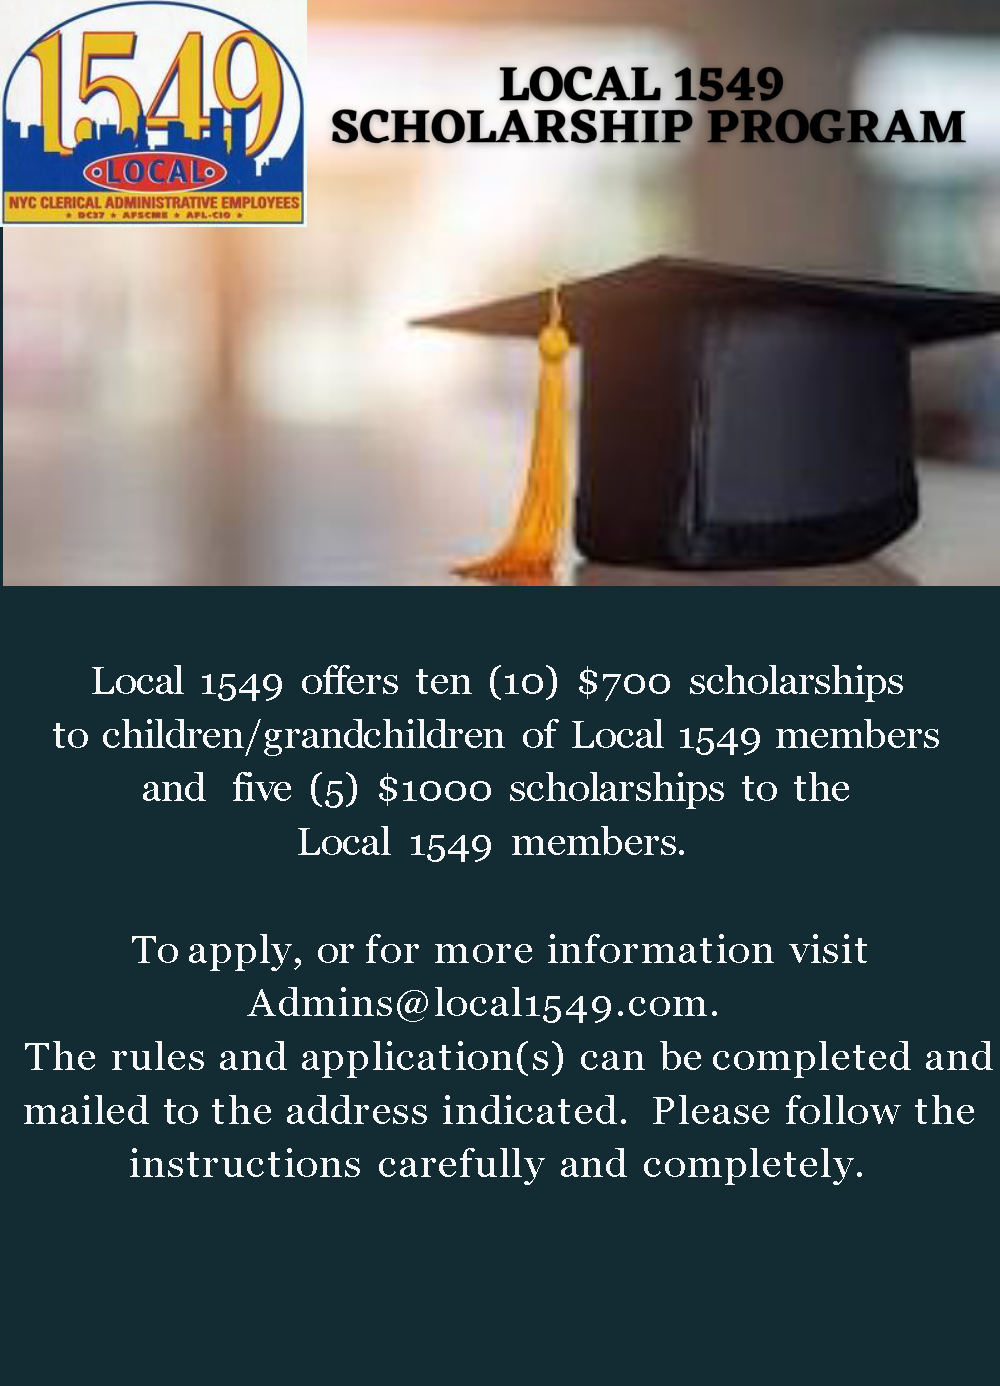 AFSCME Local 1549 Scholarship Program